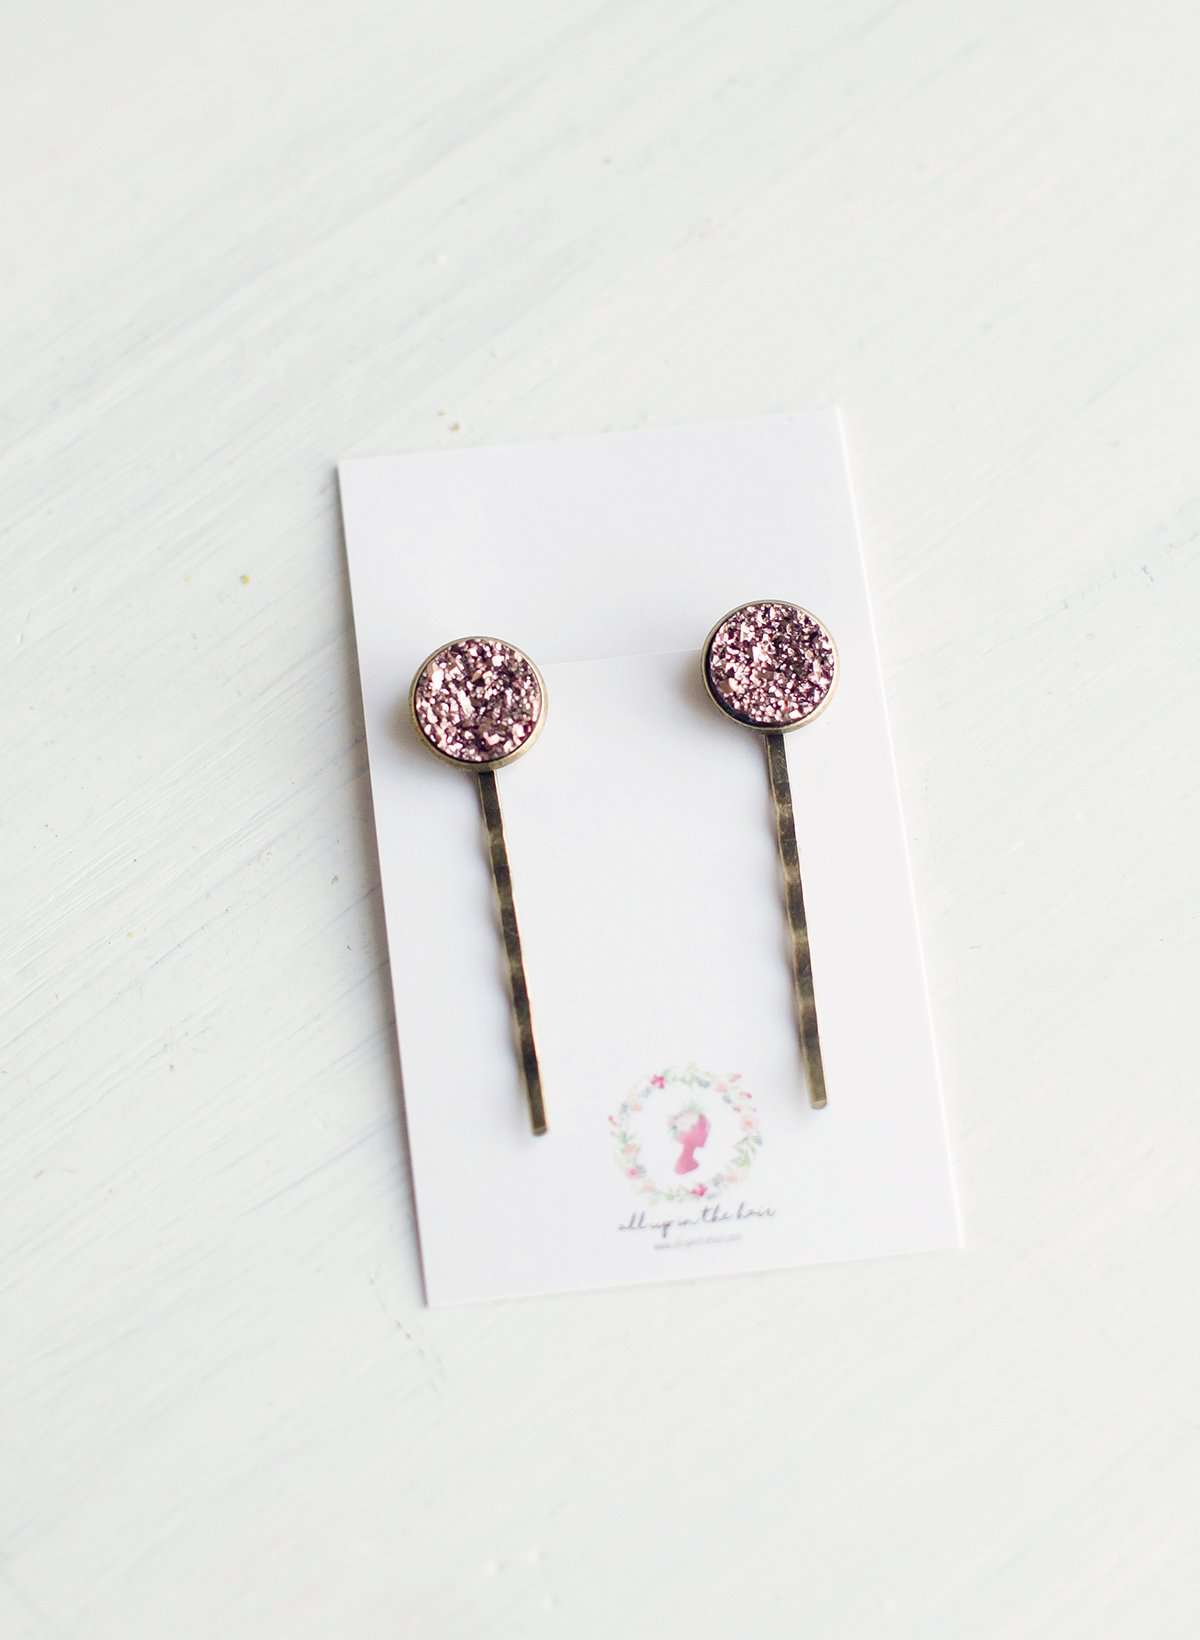 Rose gold druzy bobby pins for girls or women.